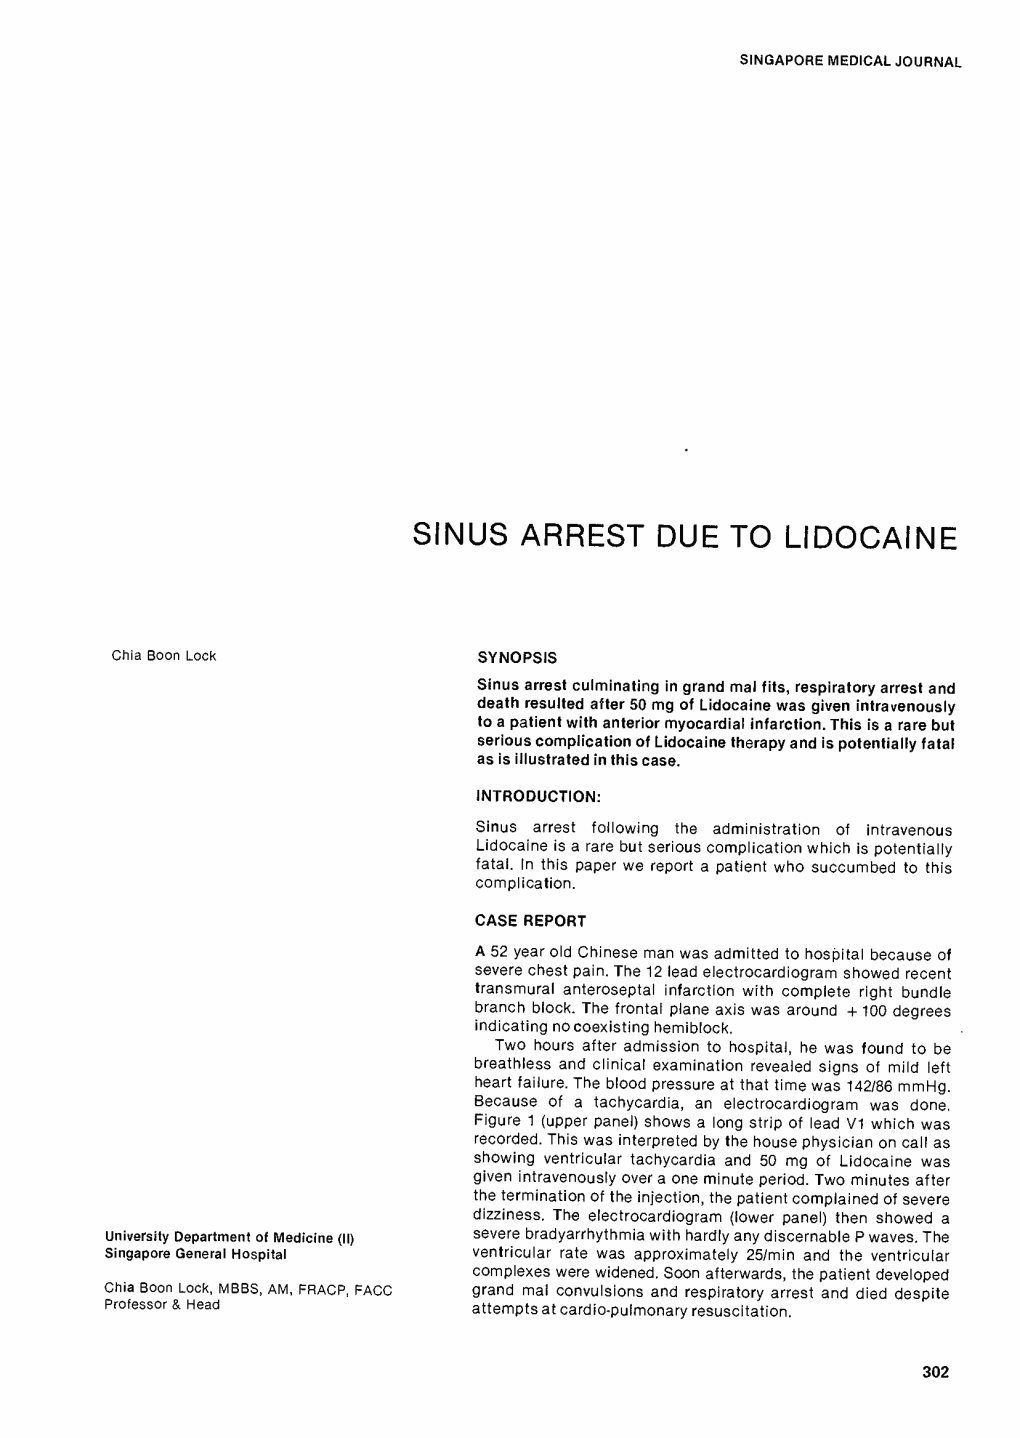 Sinus Arrest Due to Lidocaine